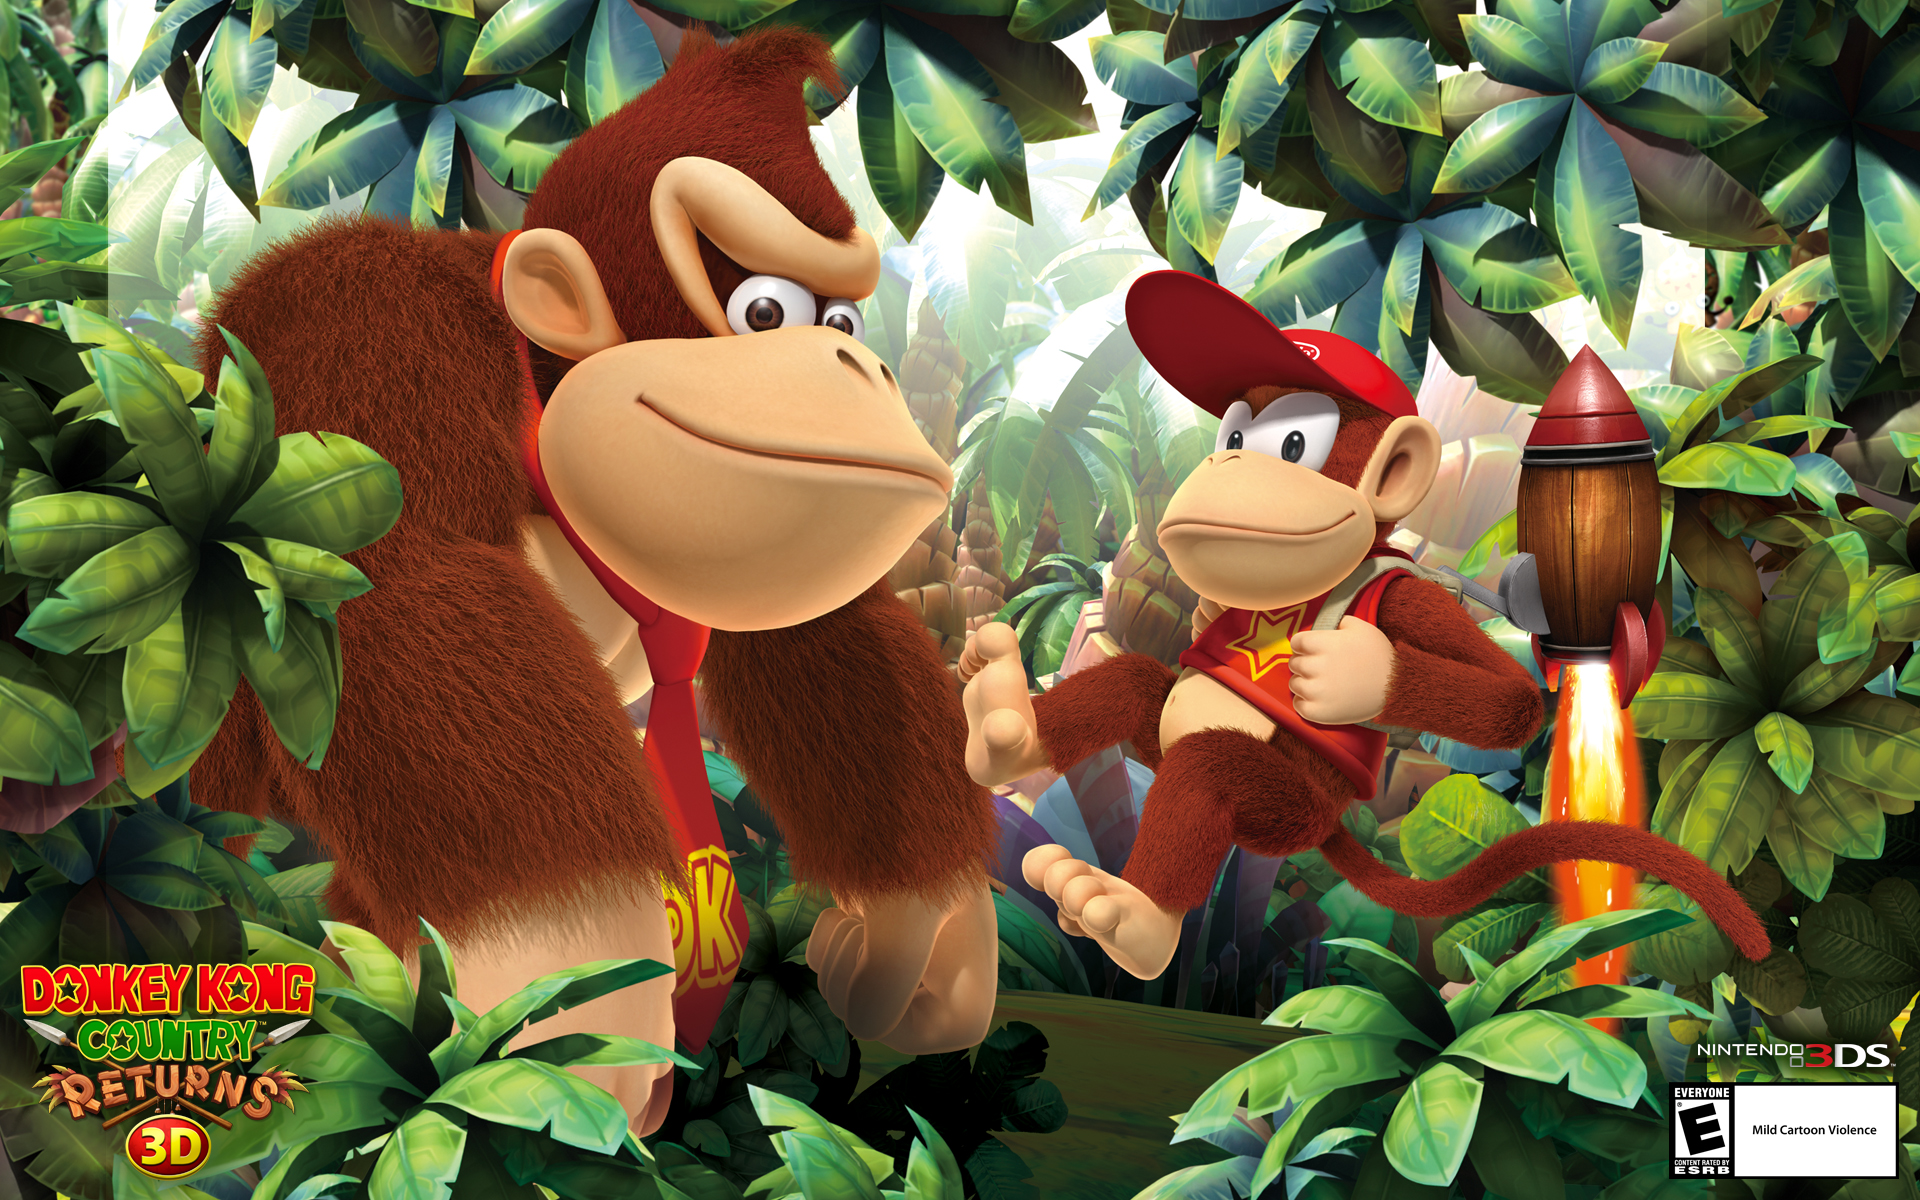 Wallpaper Kong Country Returns 3D for Nintendo 3DS